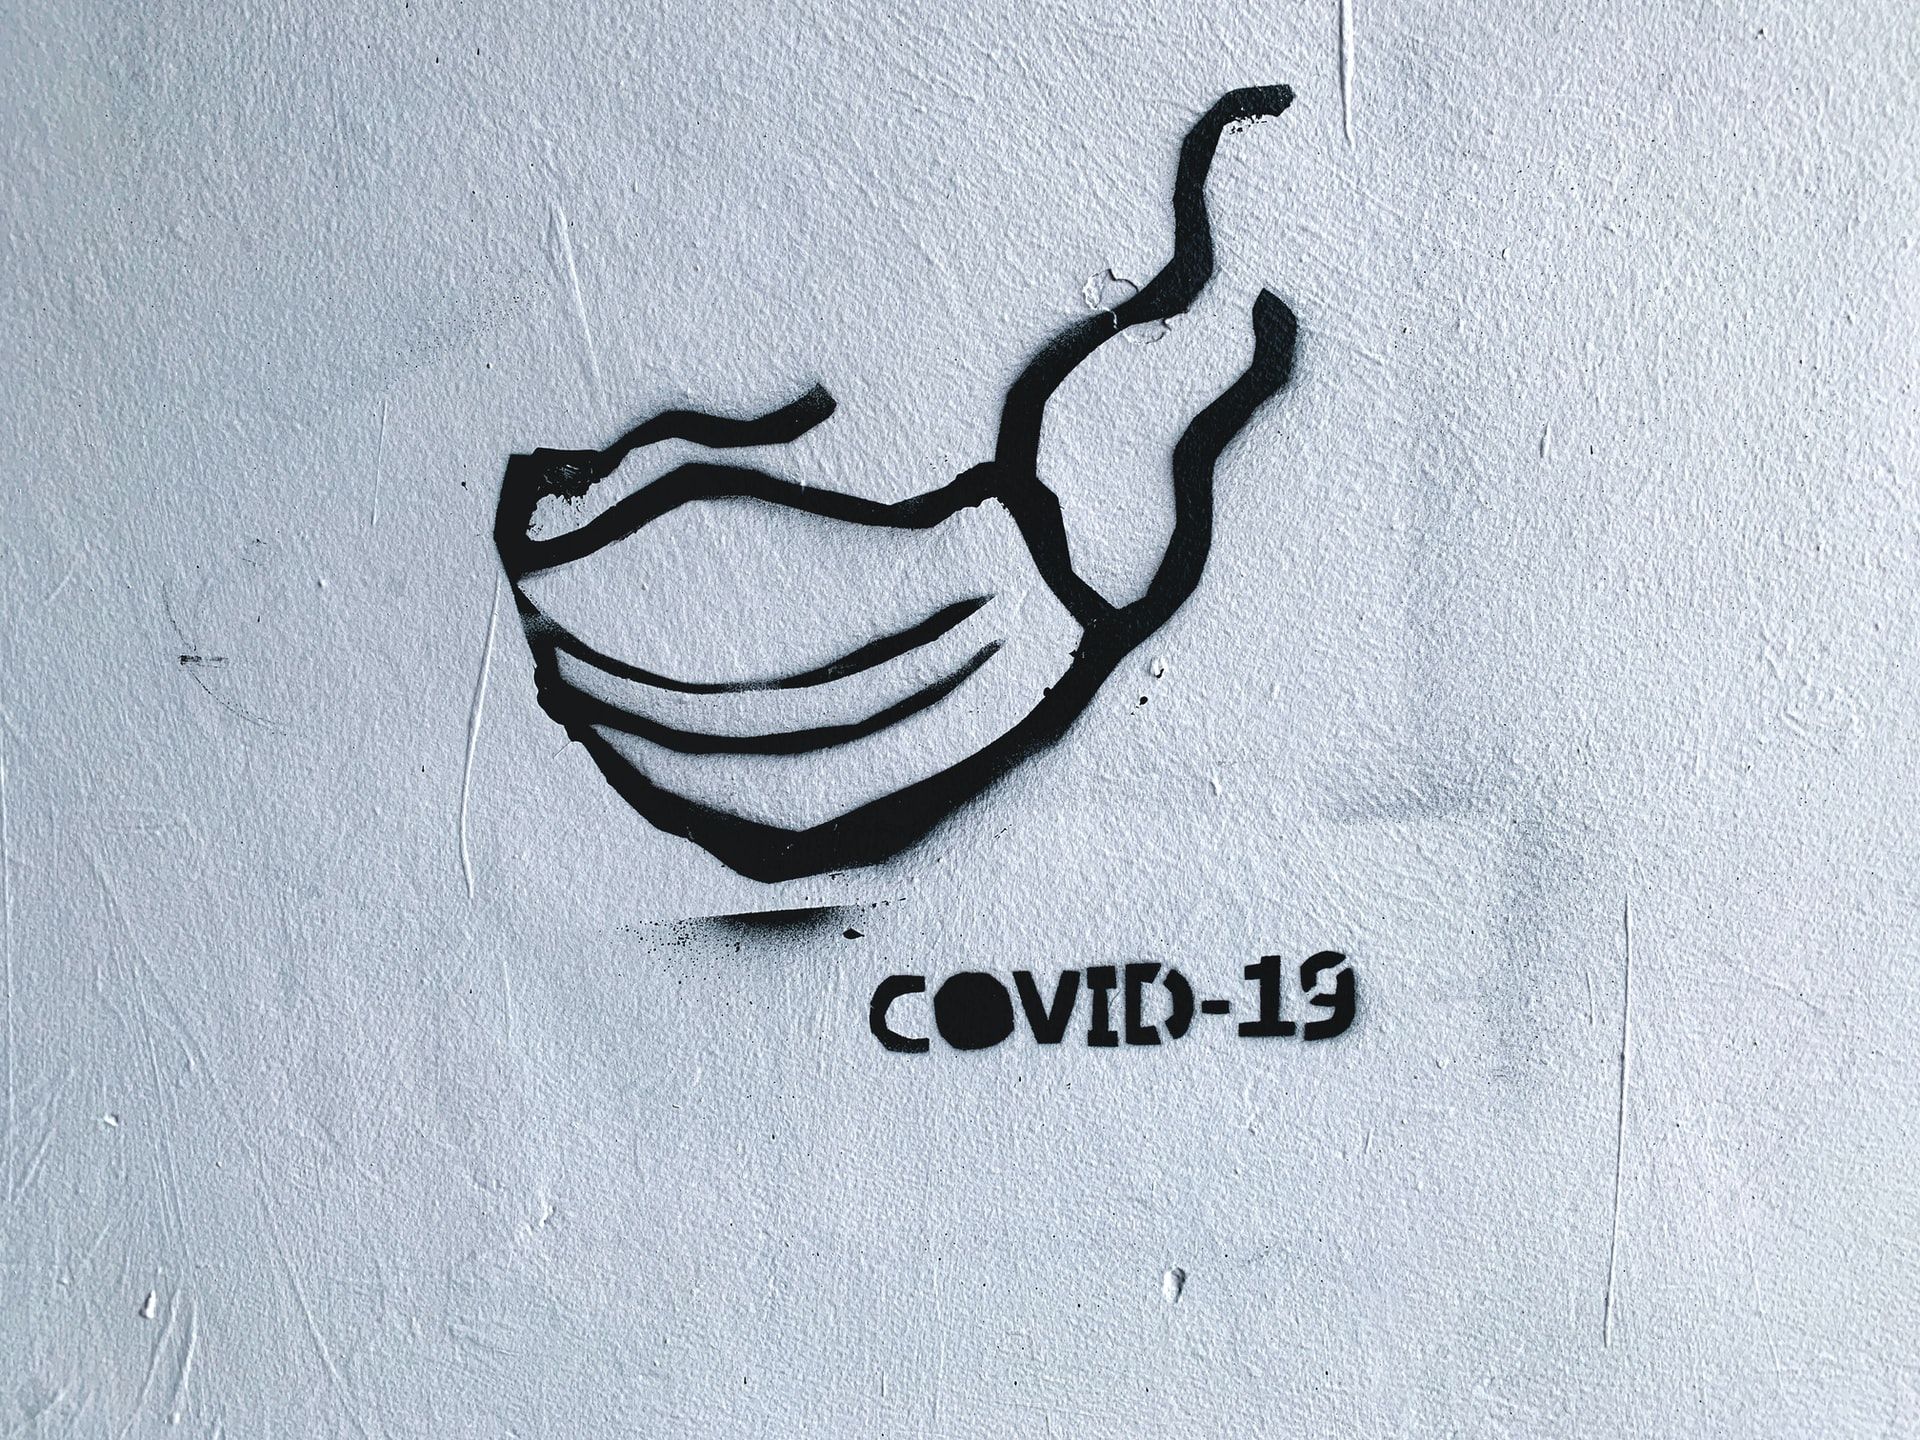 Covid-19 Secure